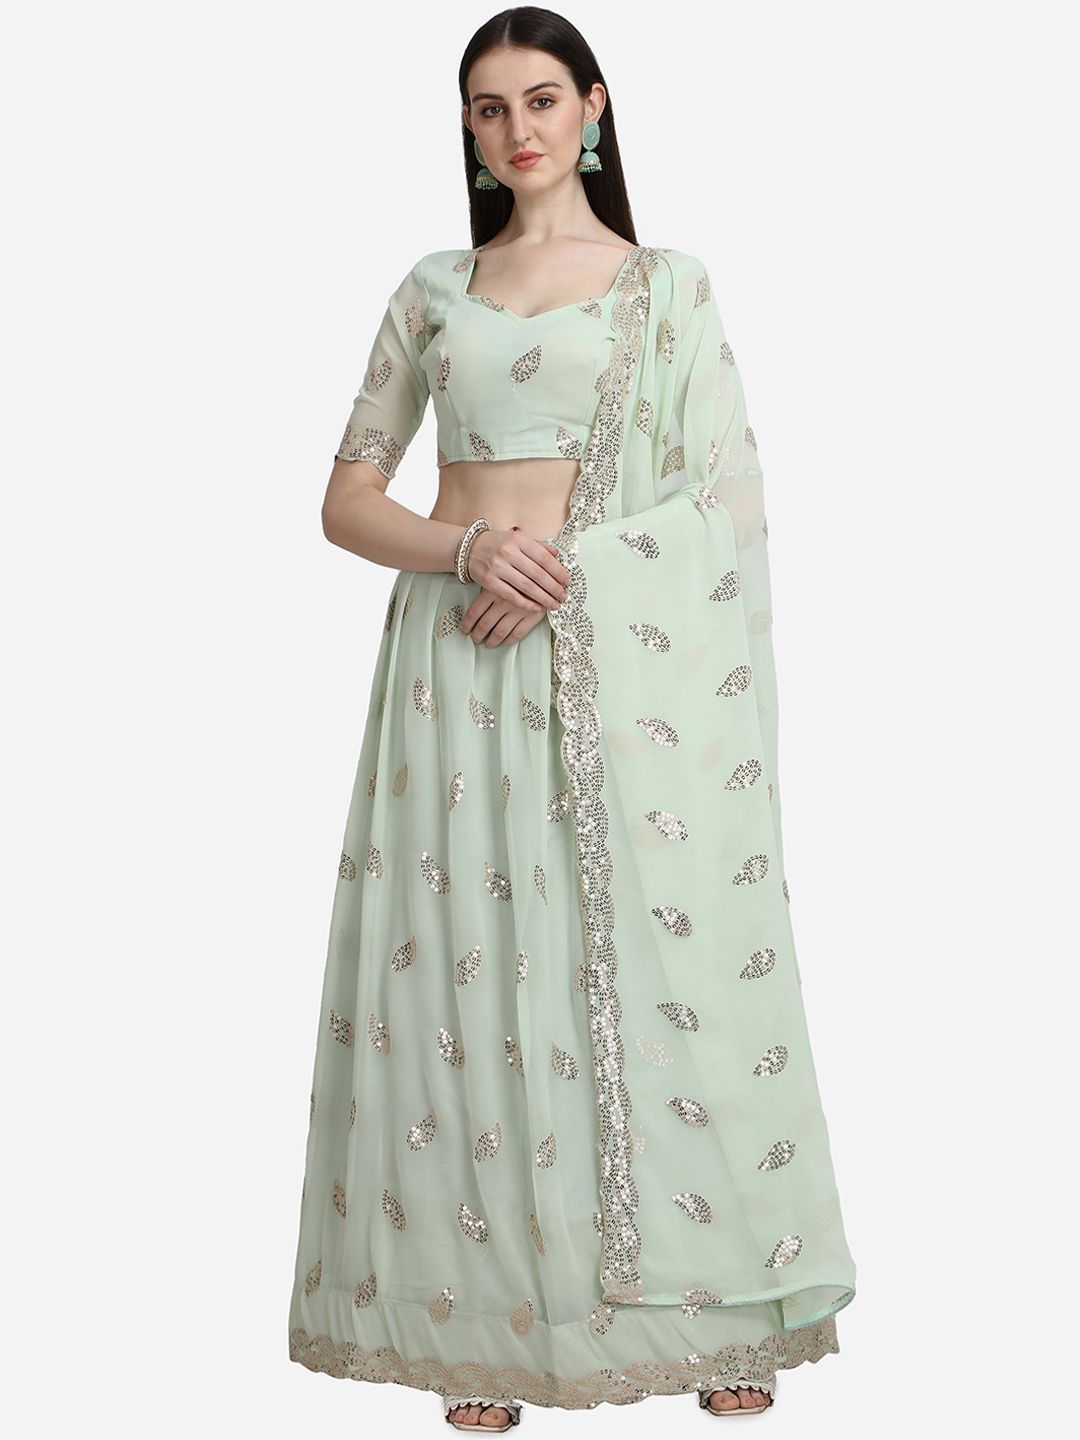 Pratham Blue Green Embellished Semi-Stitched Lehenga & Unstitched Blouse With Dupatta Price in India